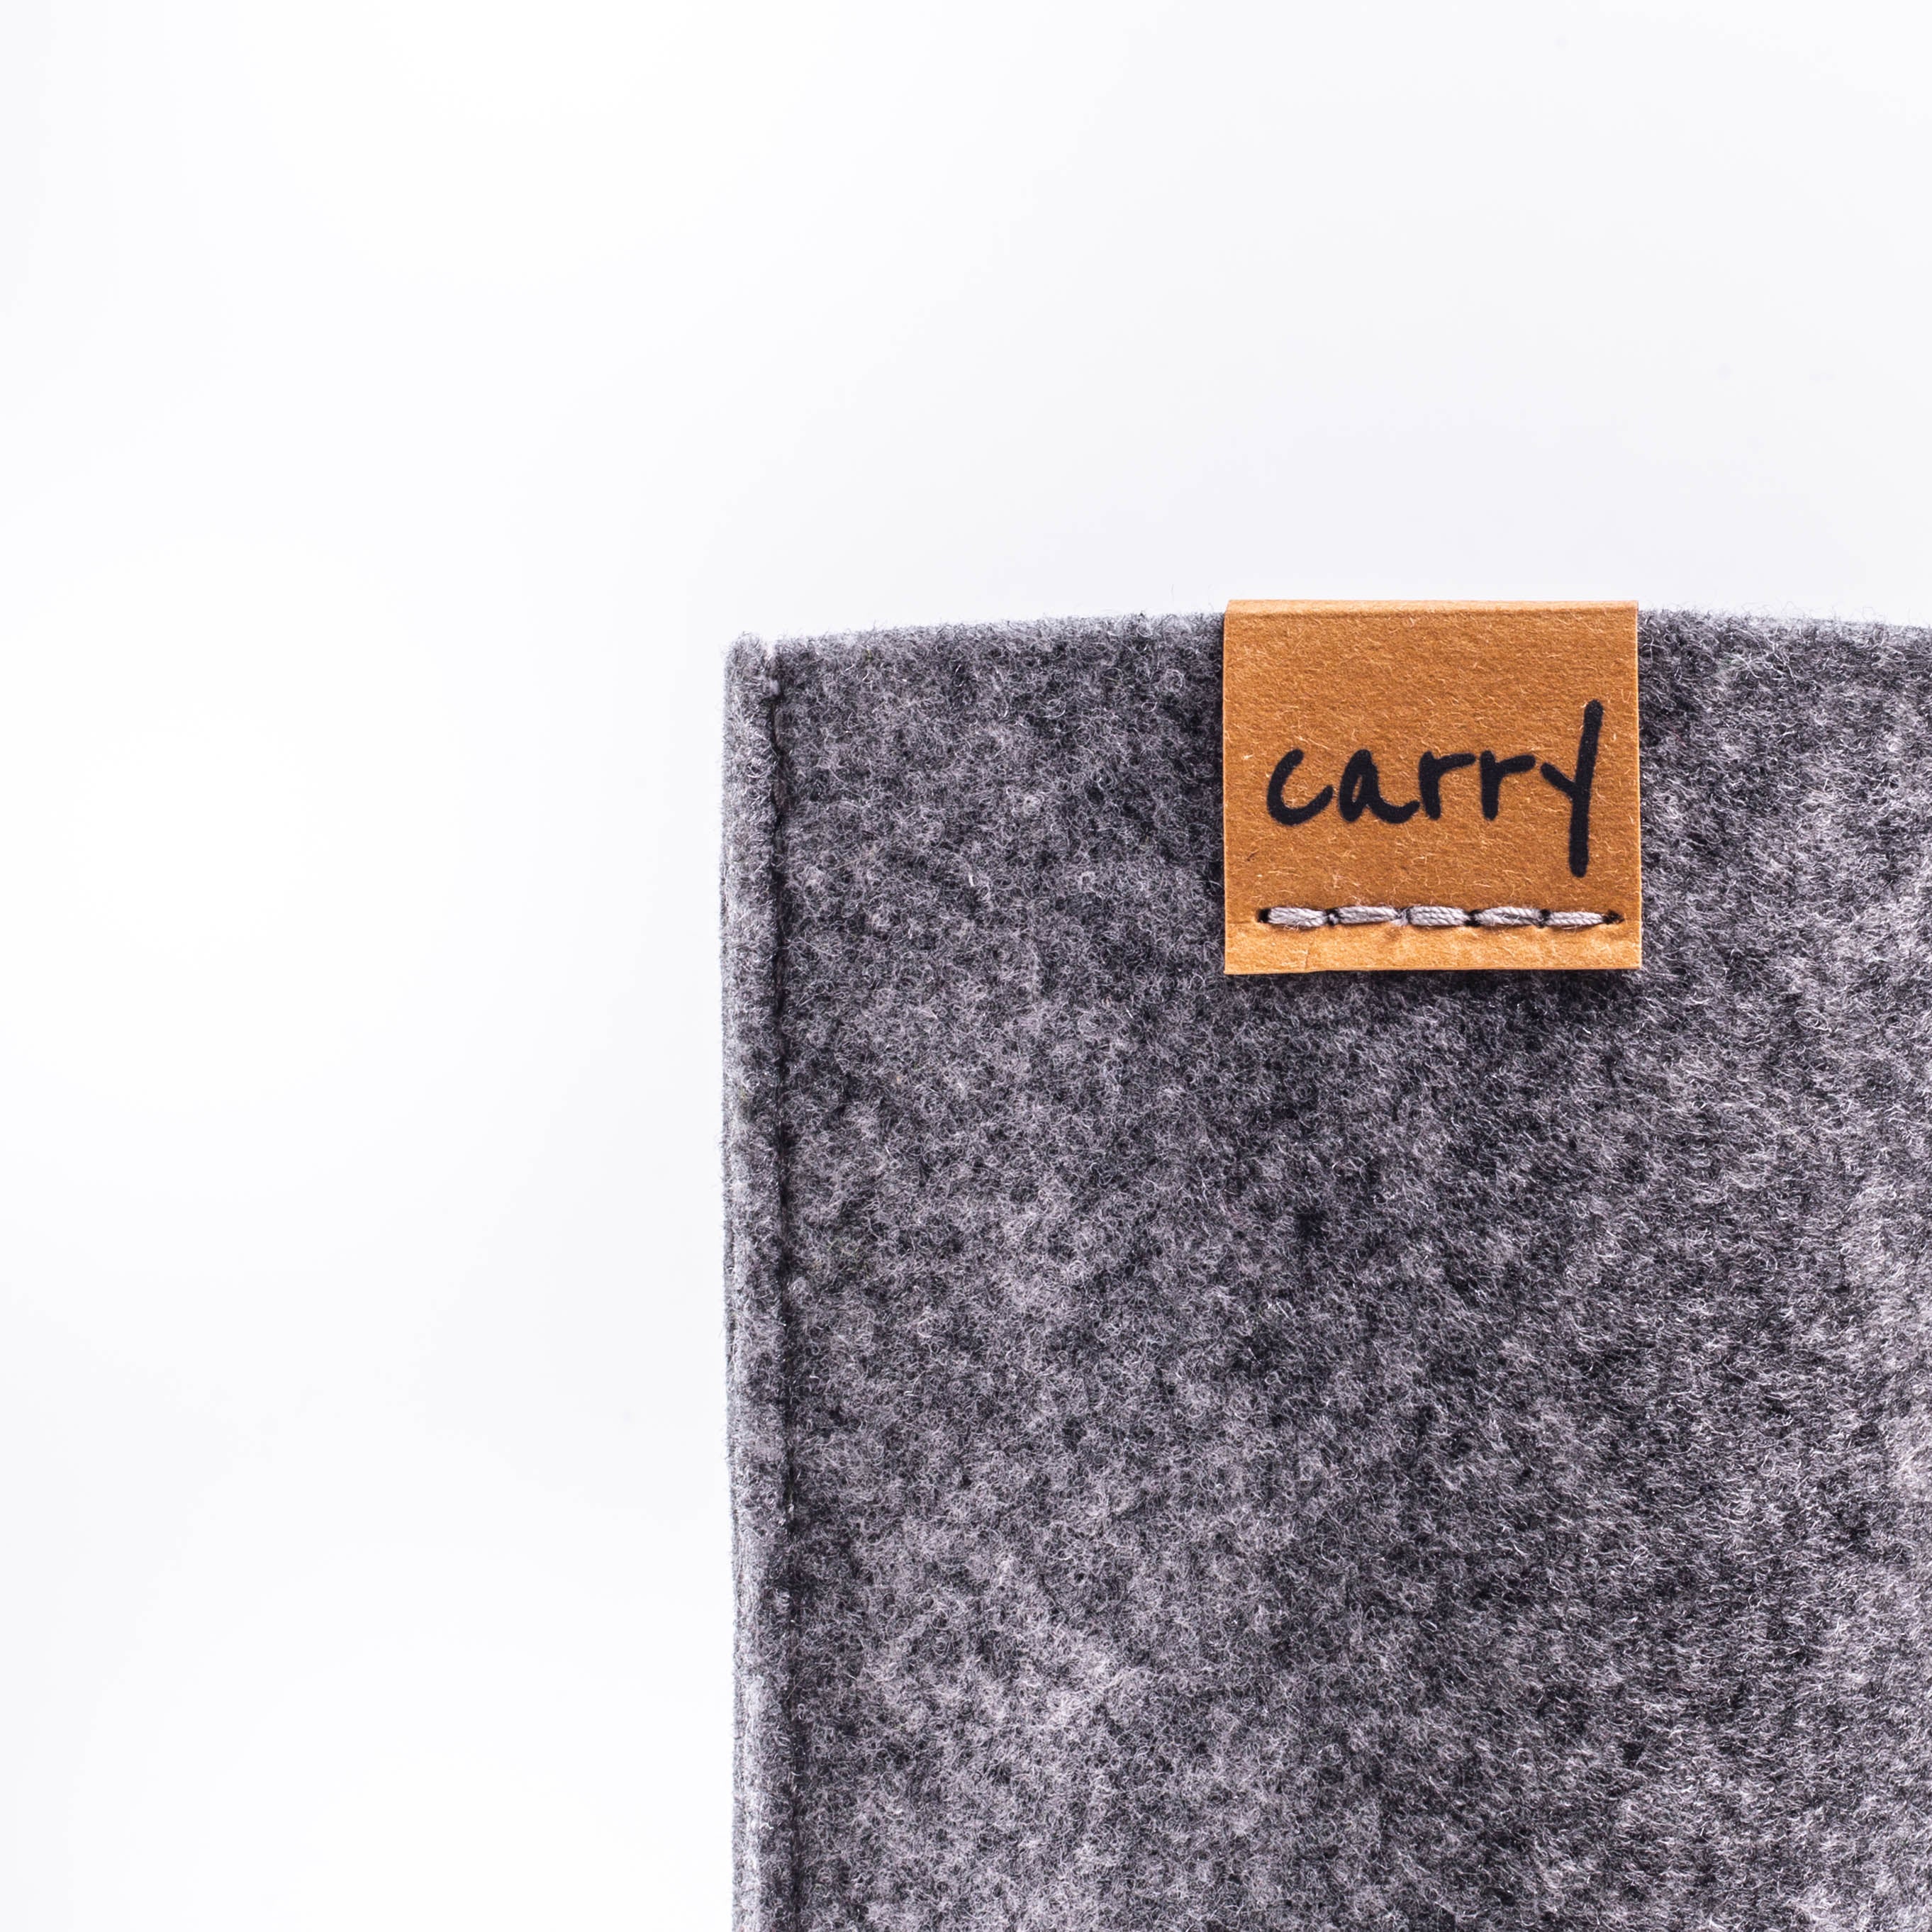 Naht und Logo an der CARRY Schutzhülle in grau aus einem Filz aus recyceltem PET